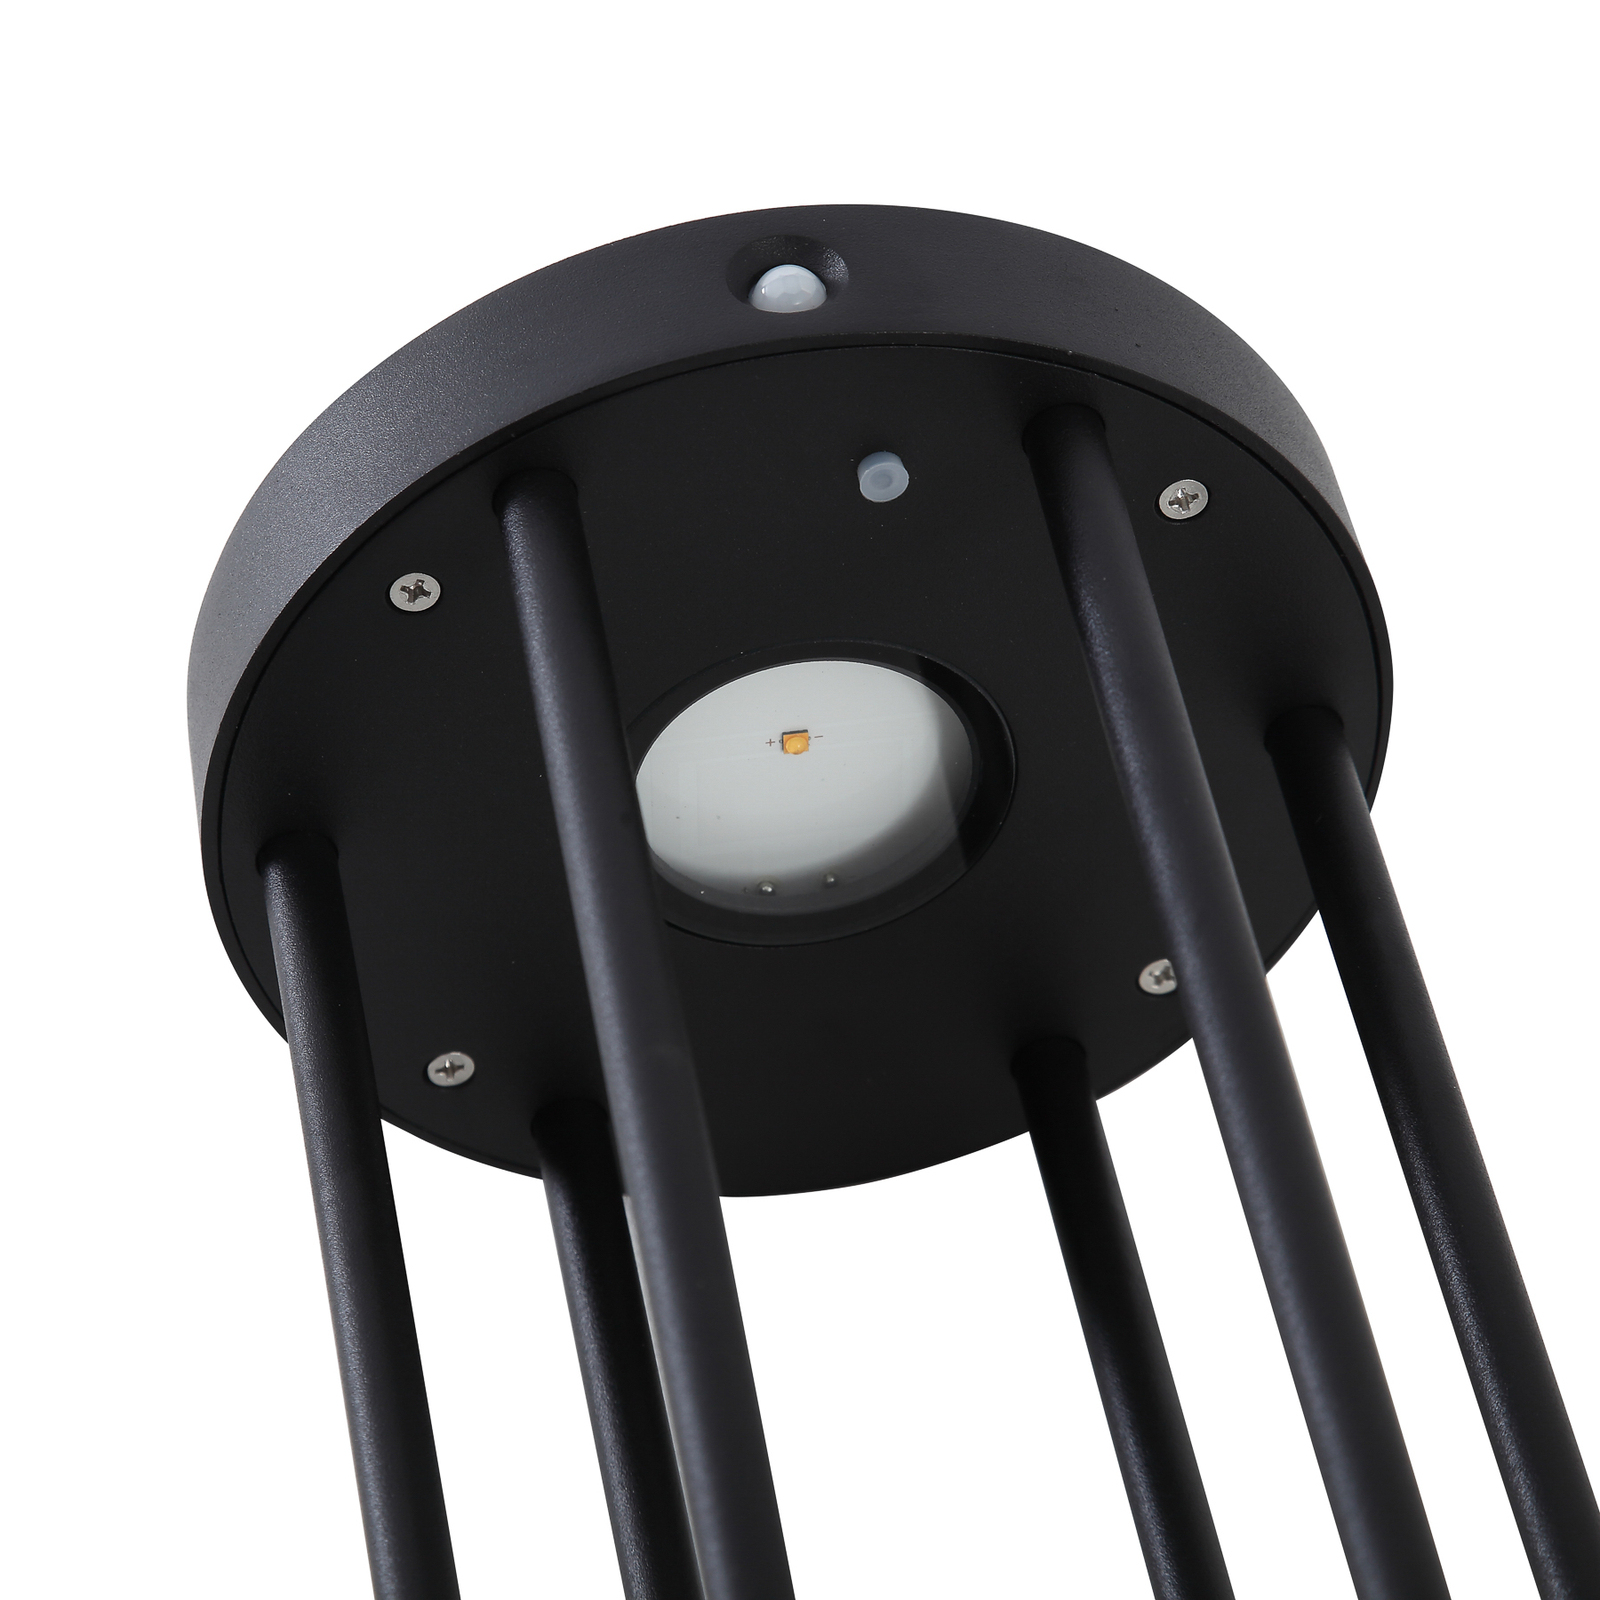 Lucande LED-solcellelampe Nilea, Ø 16 cm, svart, sensor